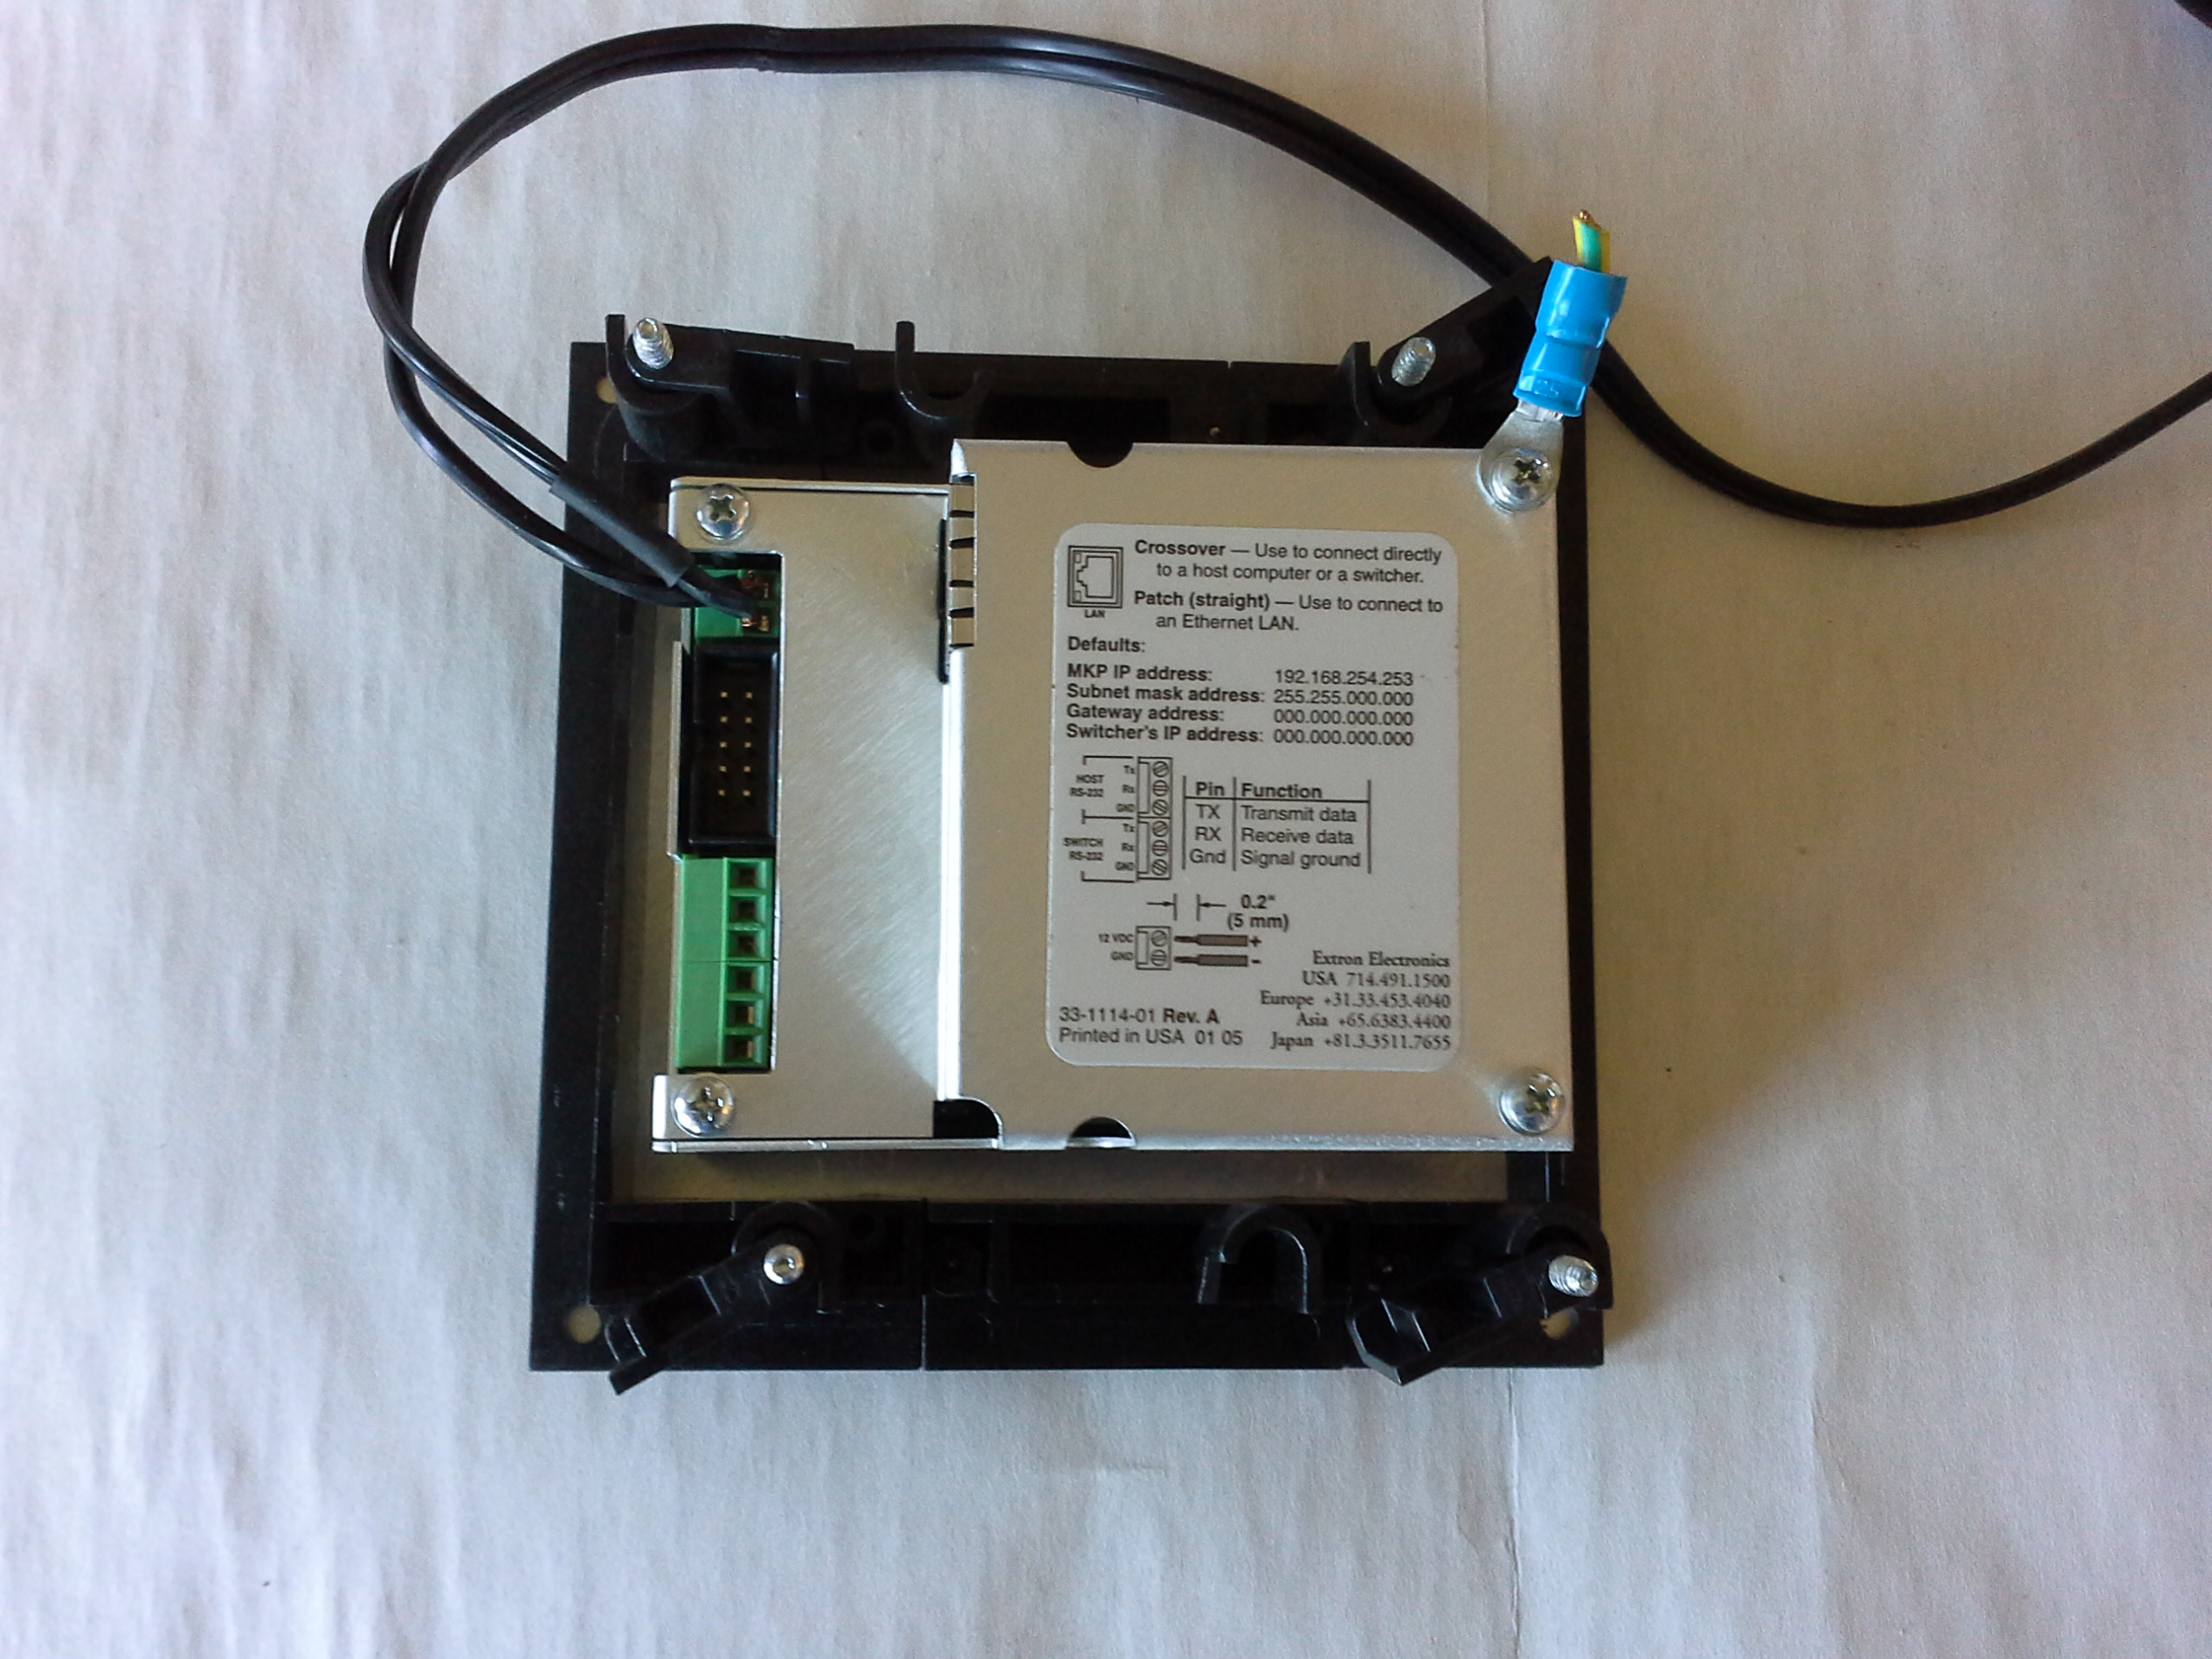 Extron MKP 3000 Black / X-Y-Fernbedienfeld mit LCD-Display